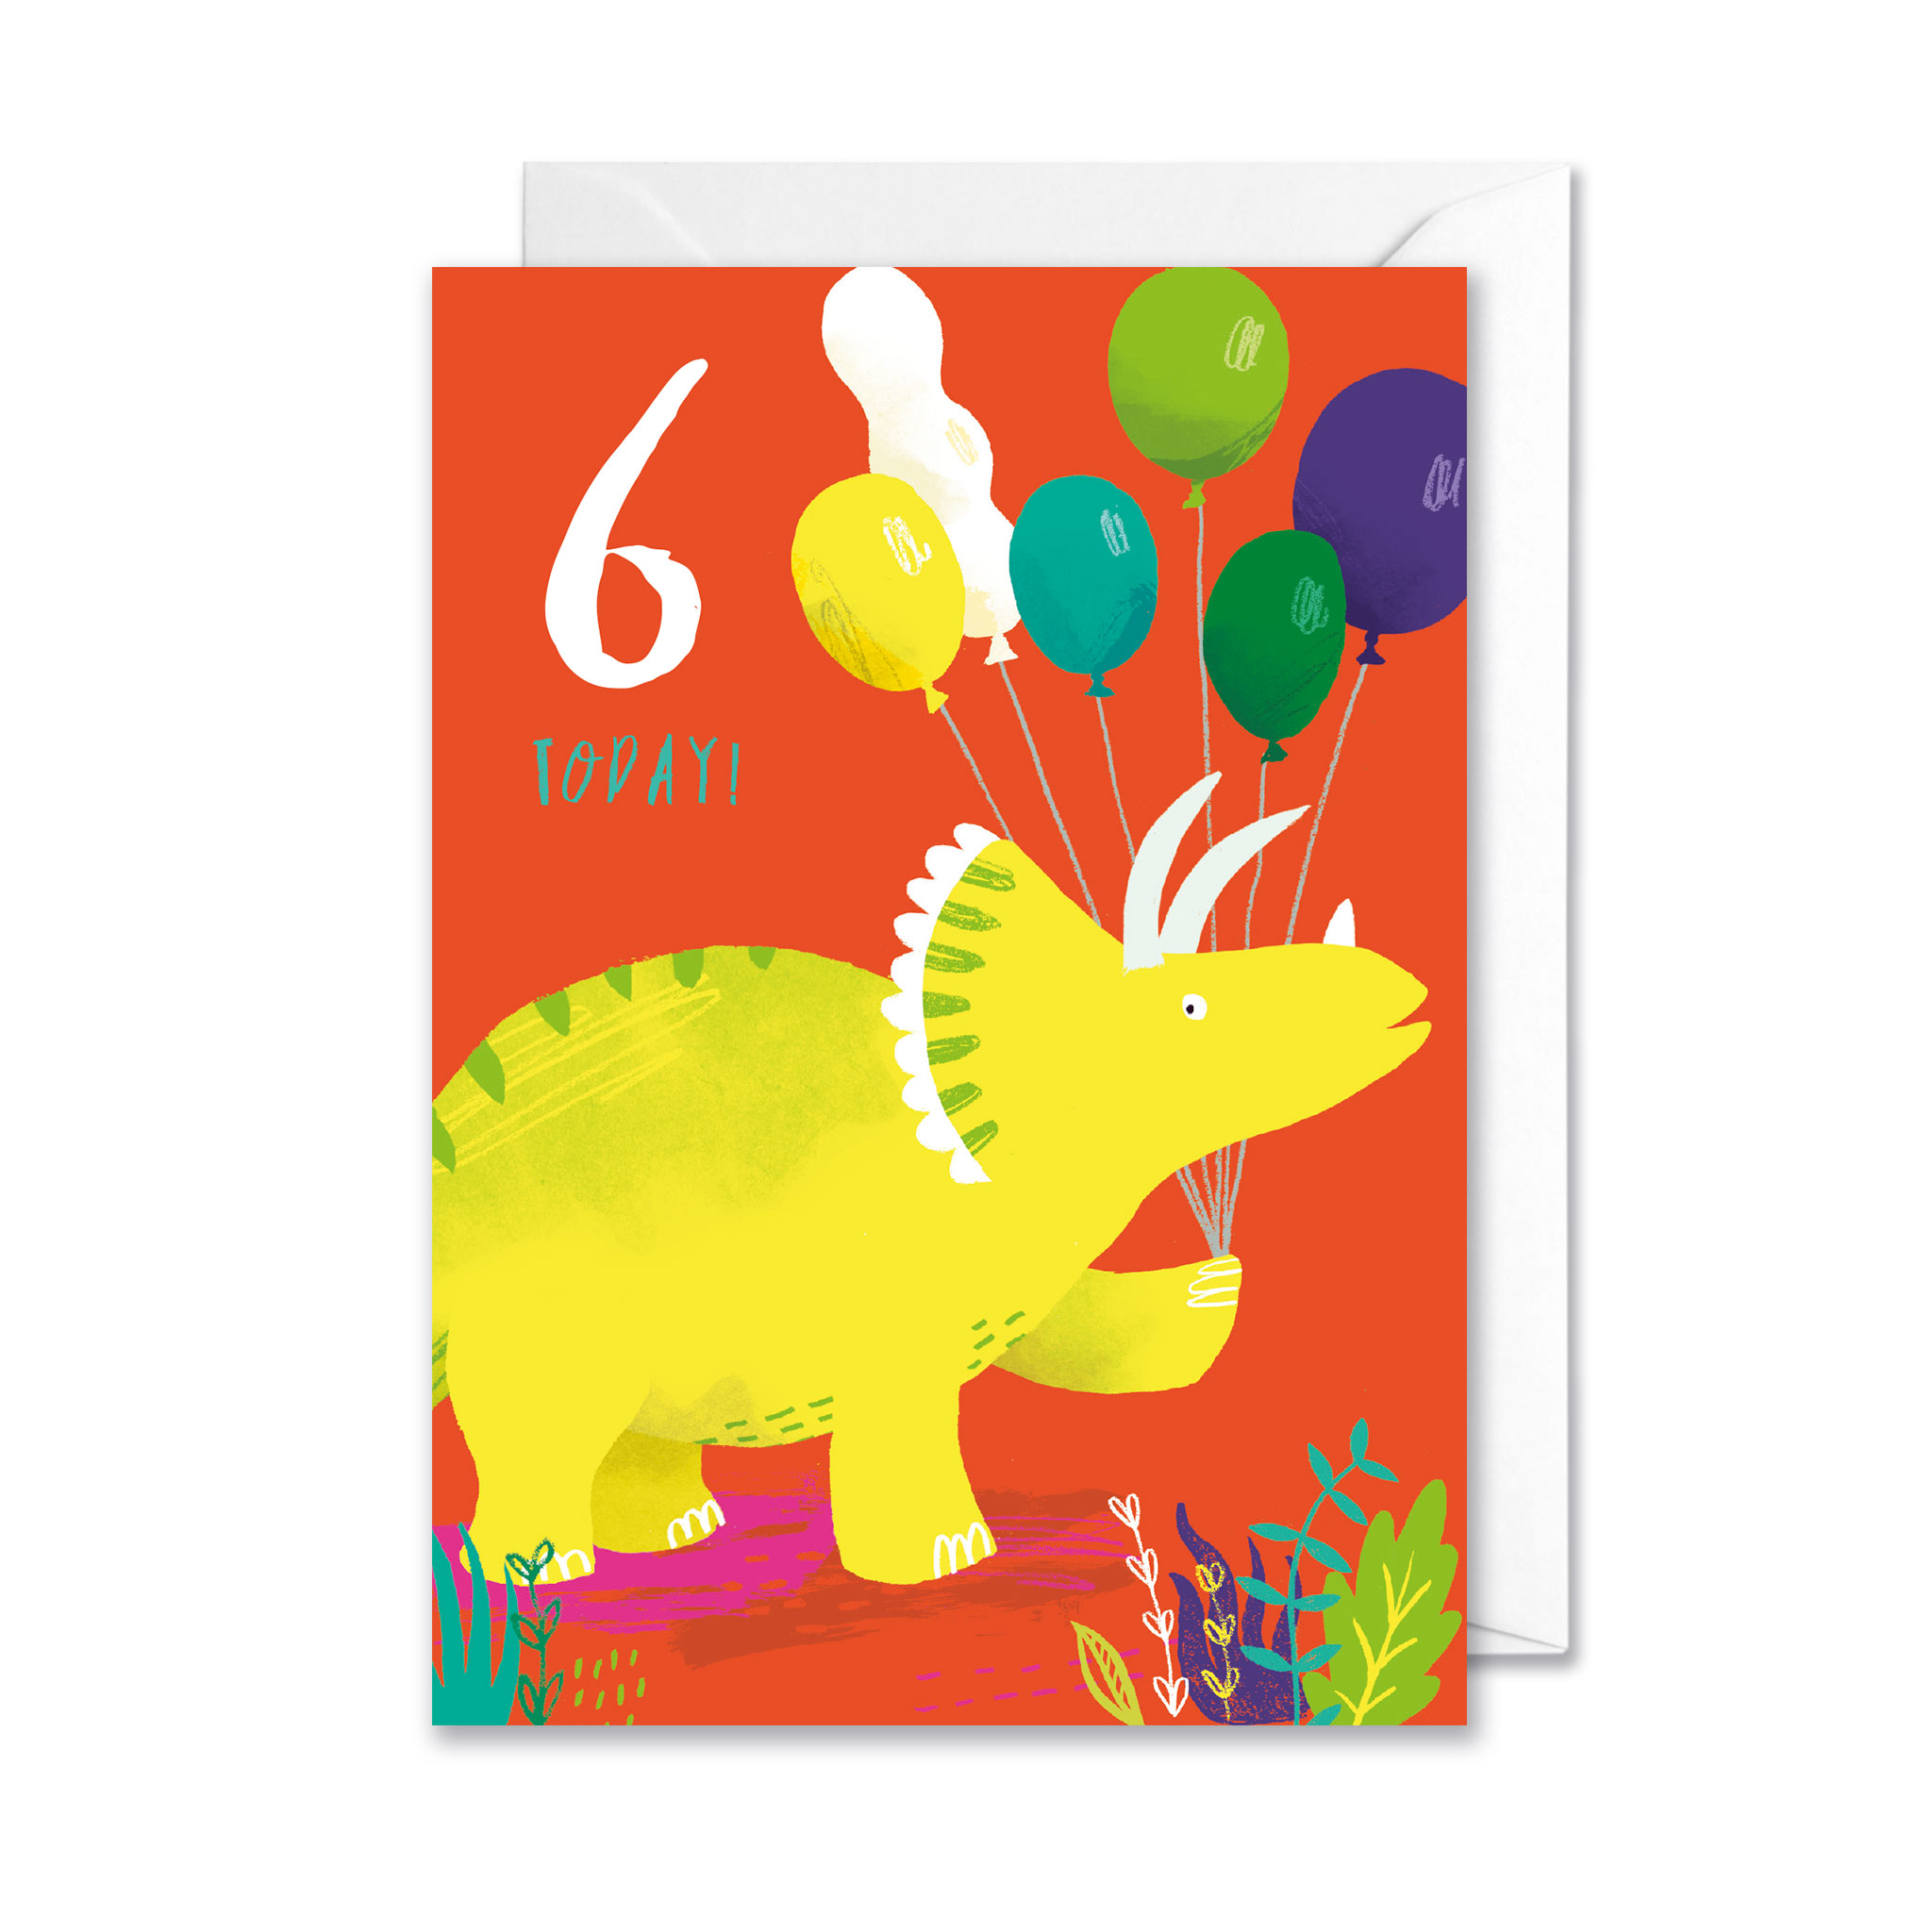 Dinosaur age 6 greetings card design